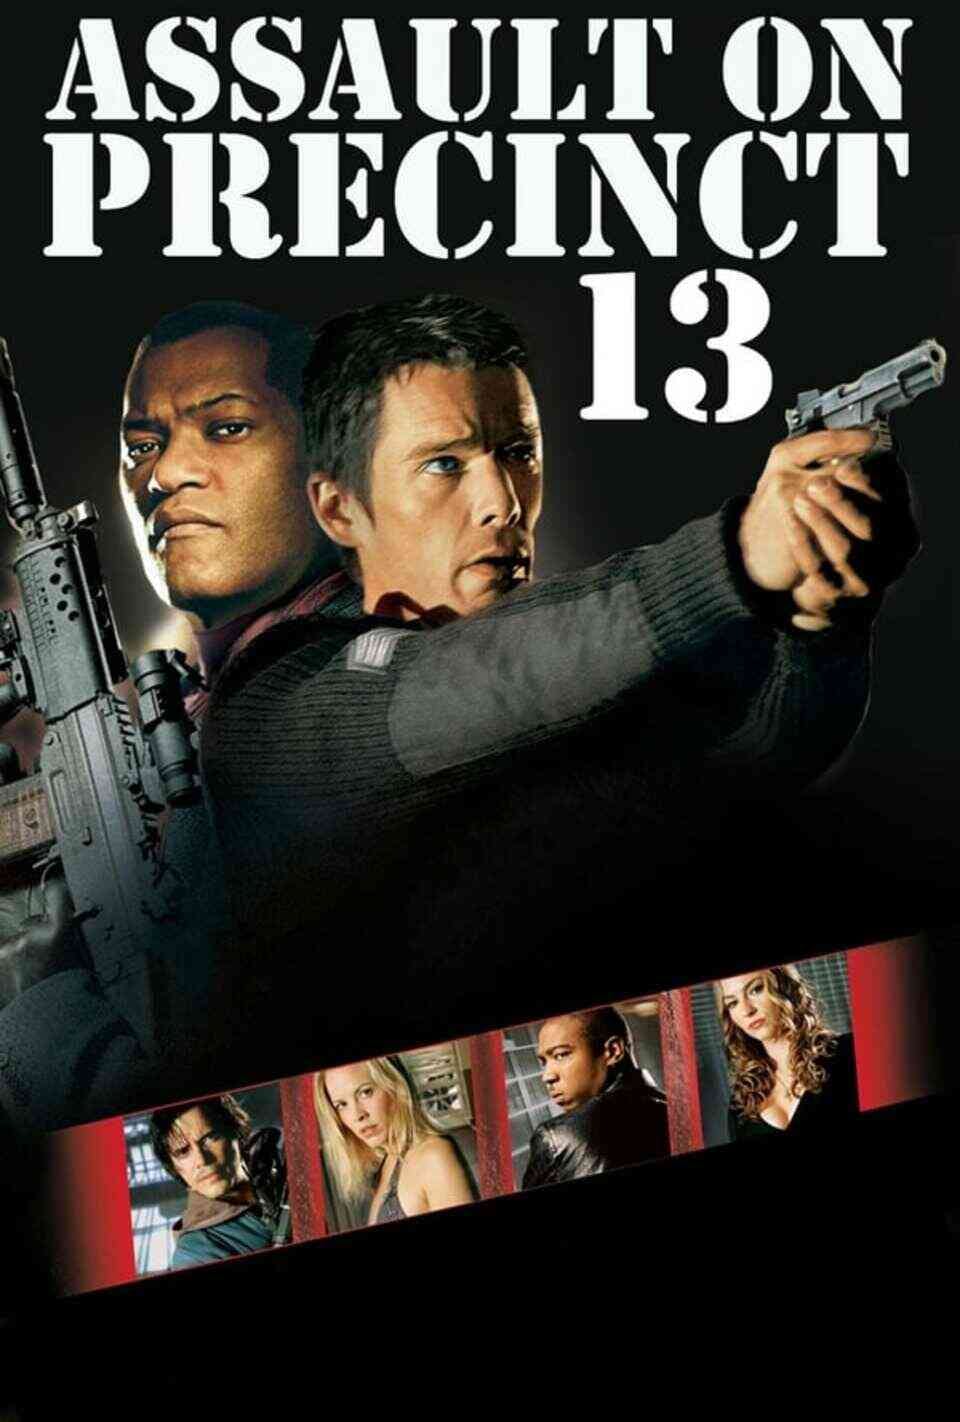 Read Assault on Precinct 13 screenplay (poster)